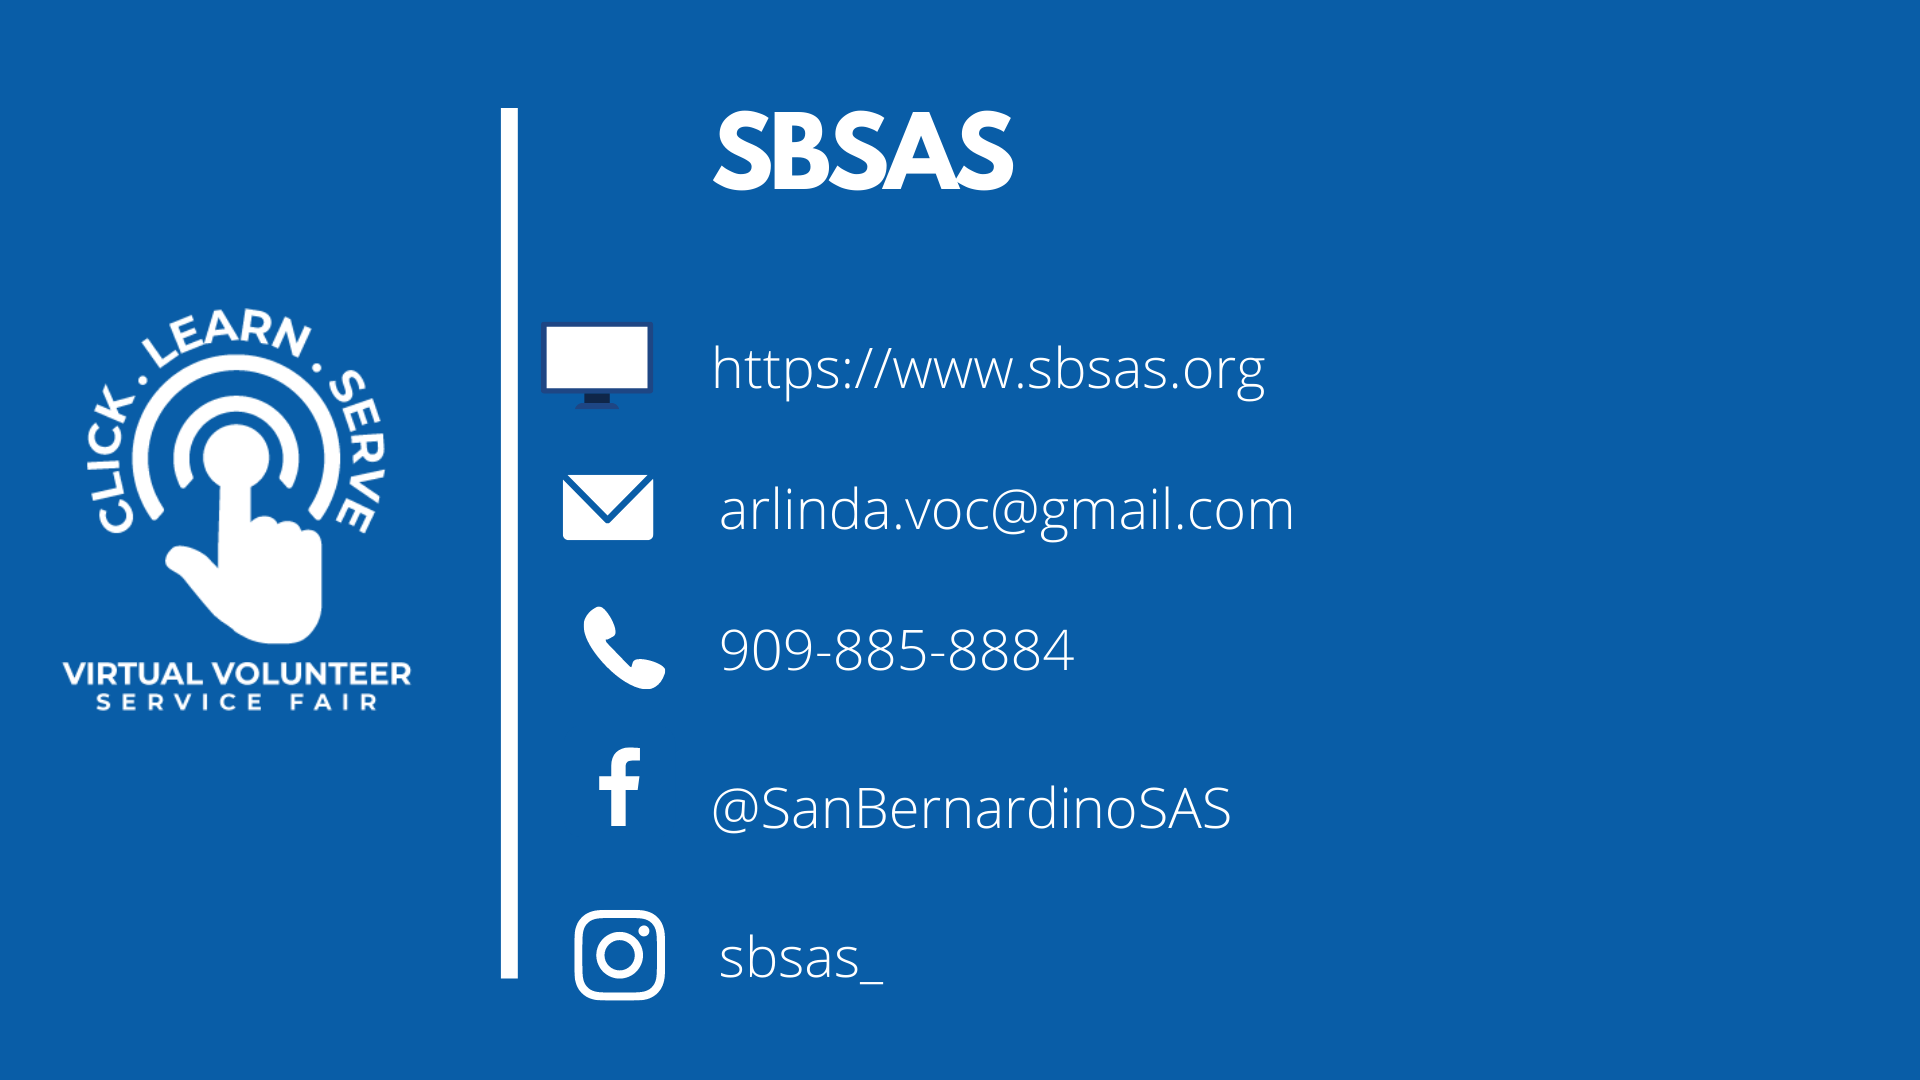 SBSAS nonprofit video for the Virtual Volunteer Service Fair.